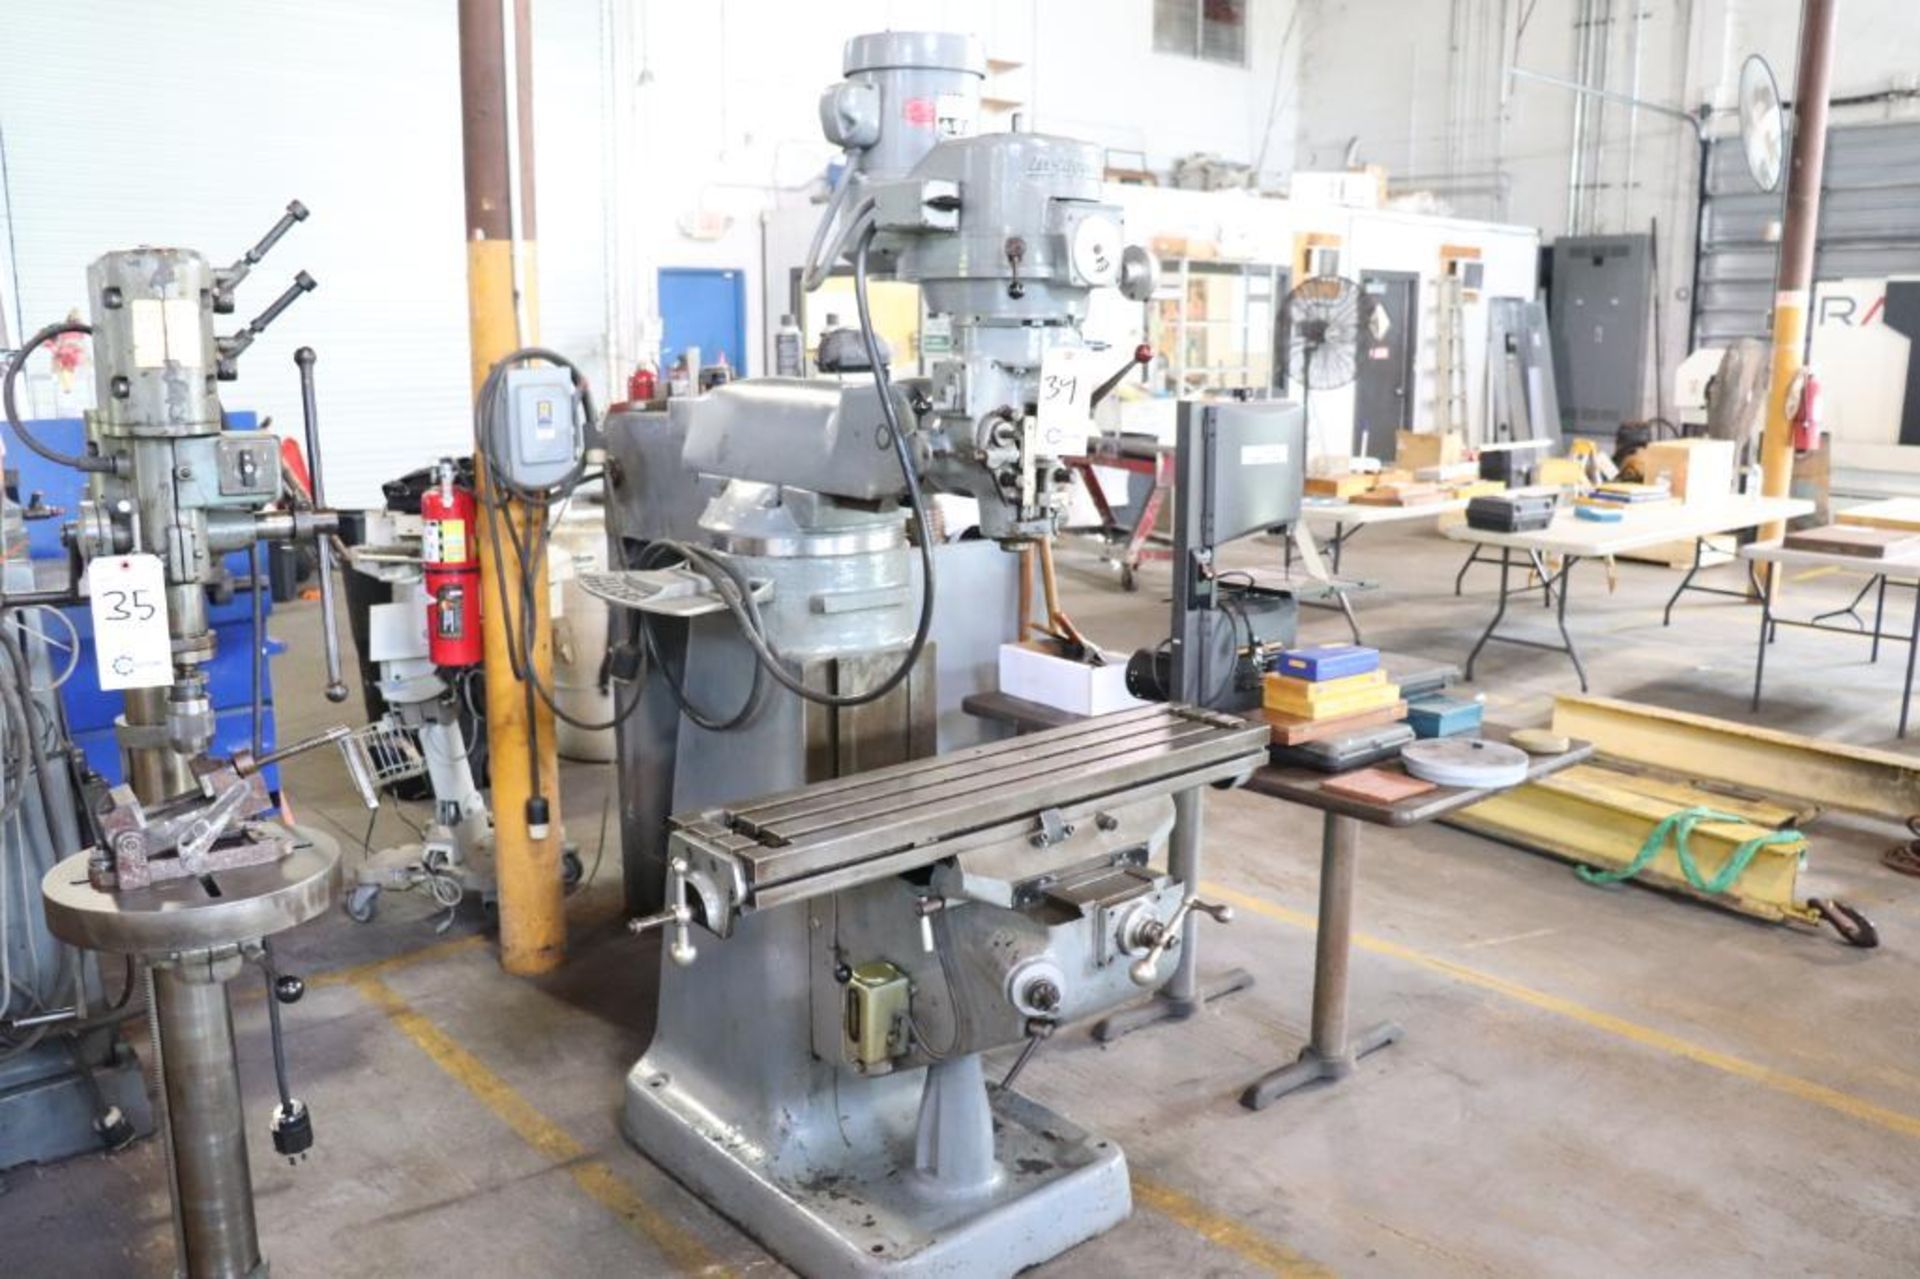 Import milling machine w/ Bridgeport head